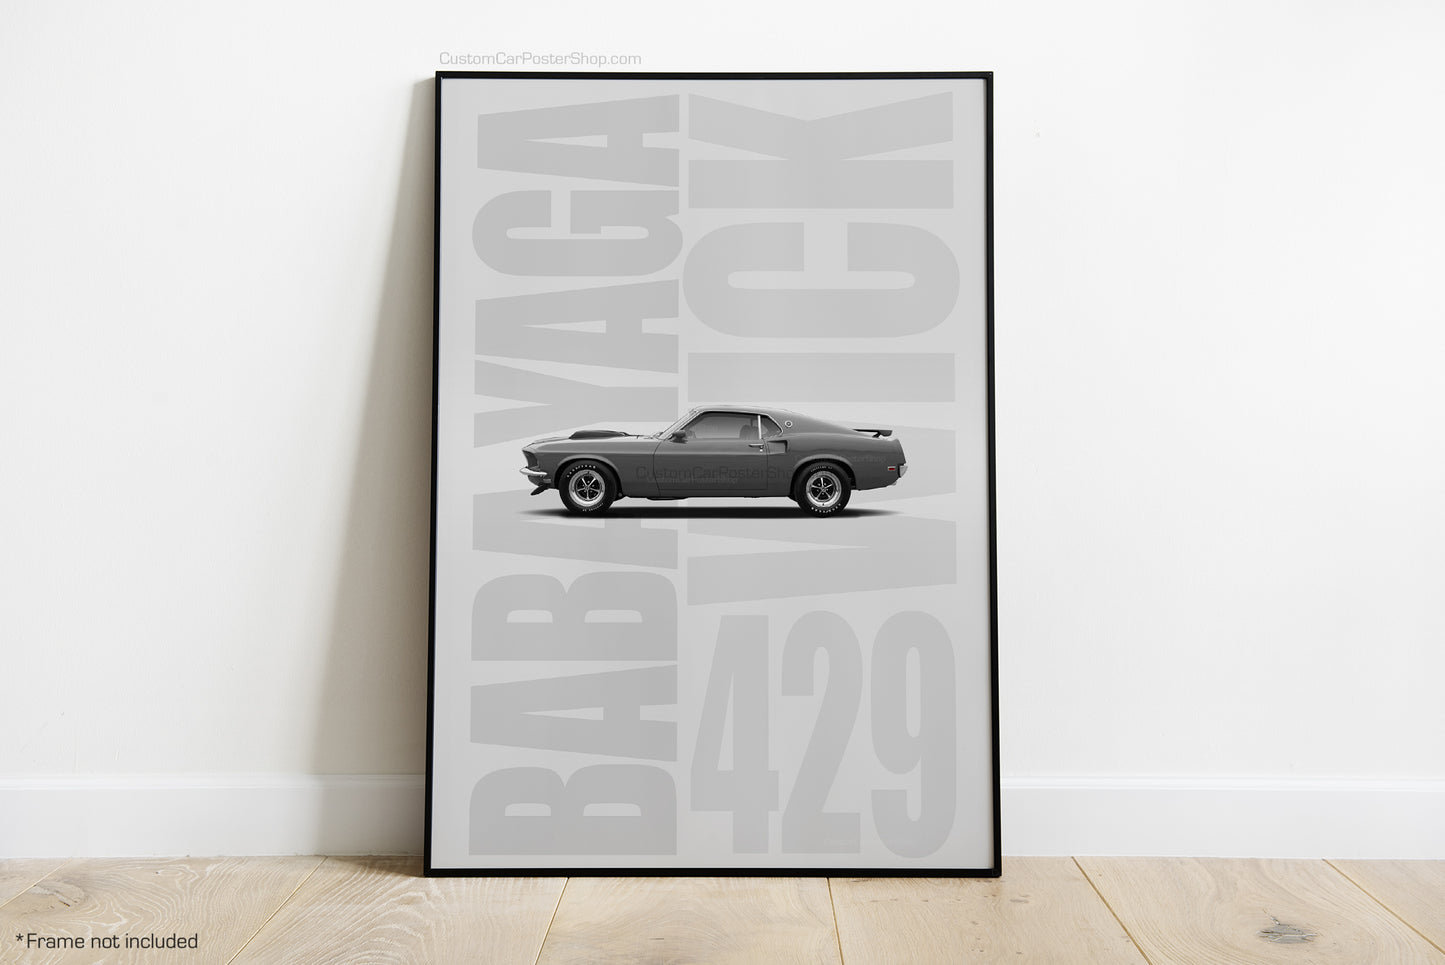 John Wick - Ford Mustang BOSS 429 Wall Art - Movie Cars